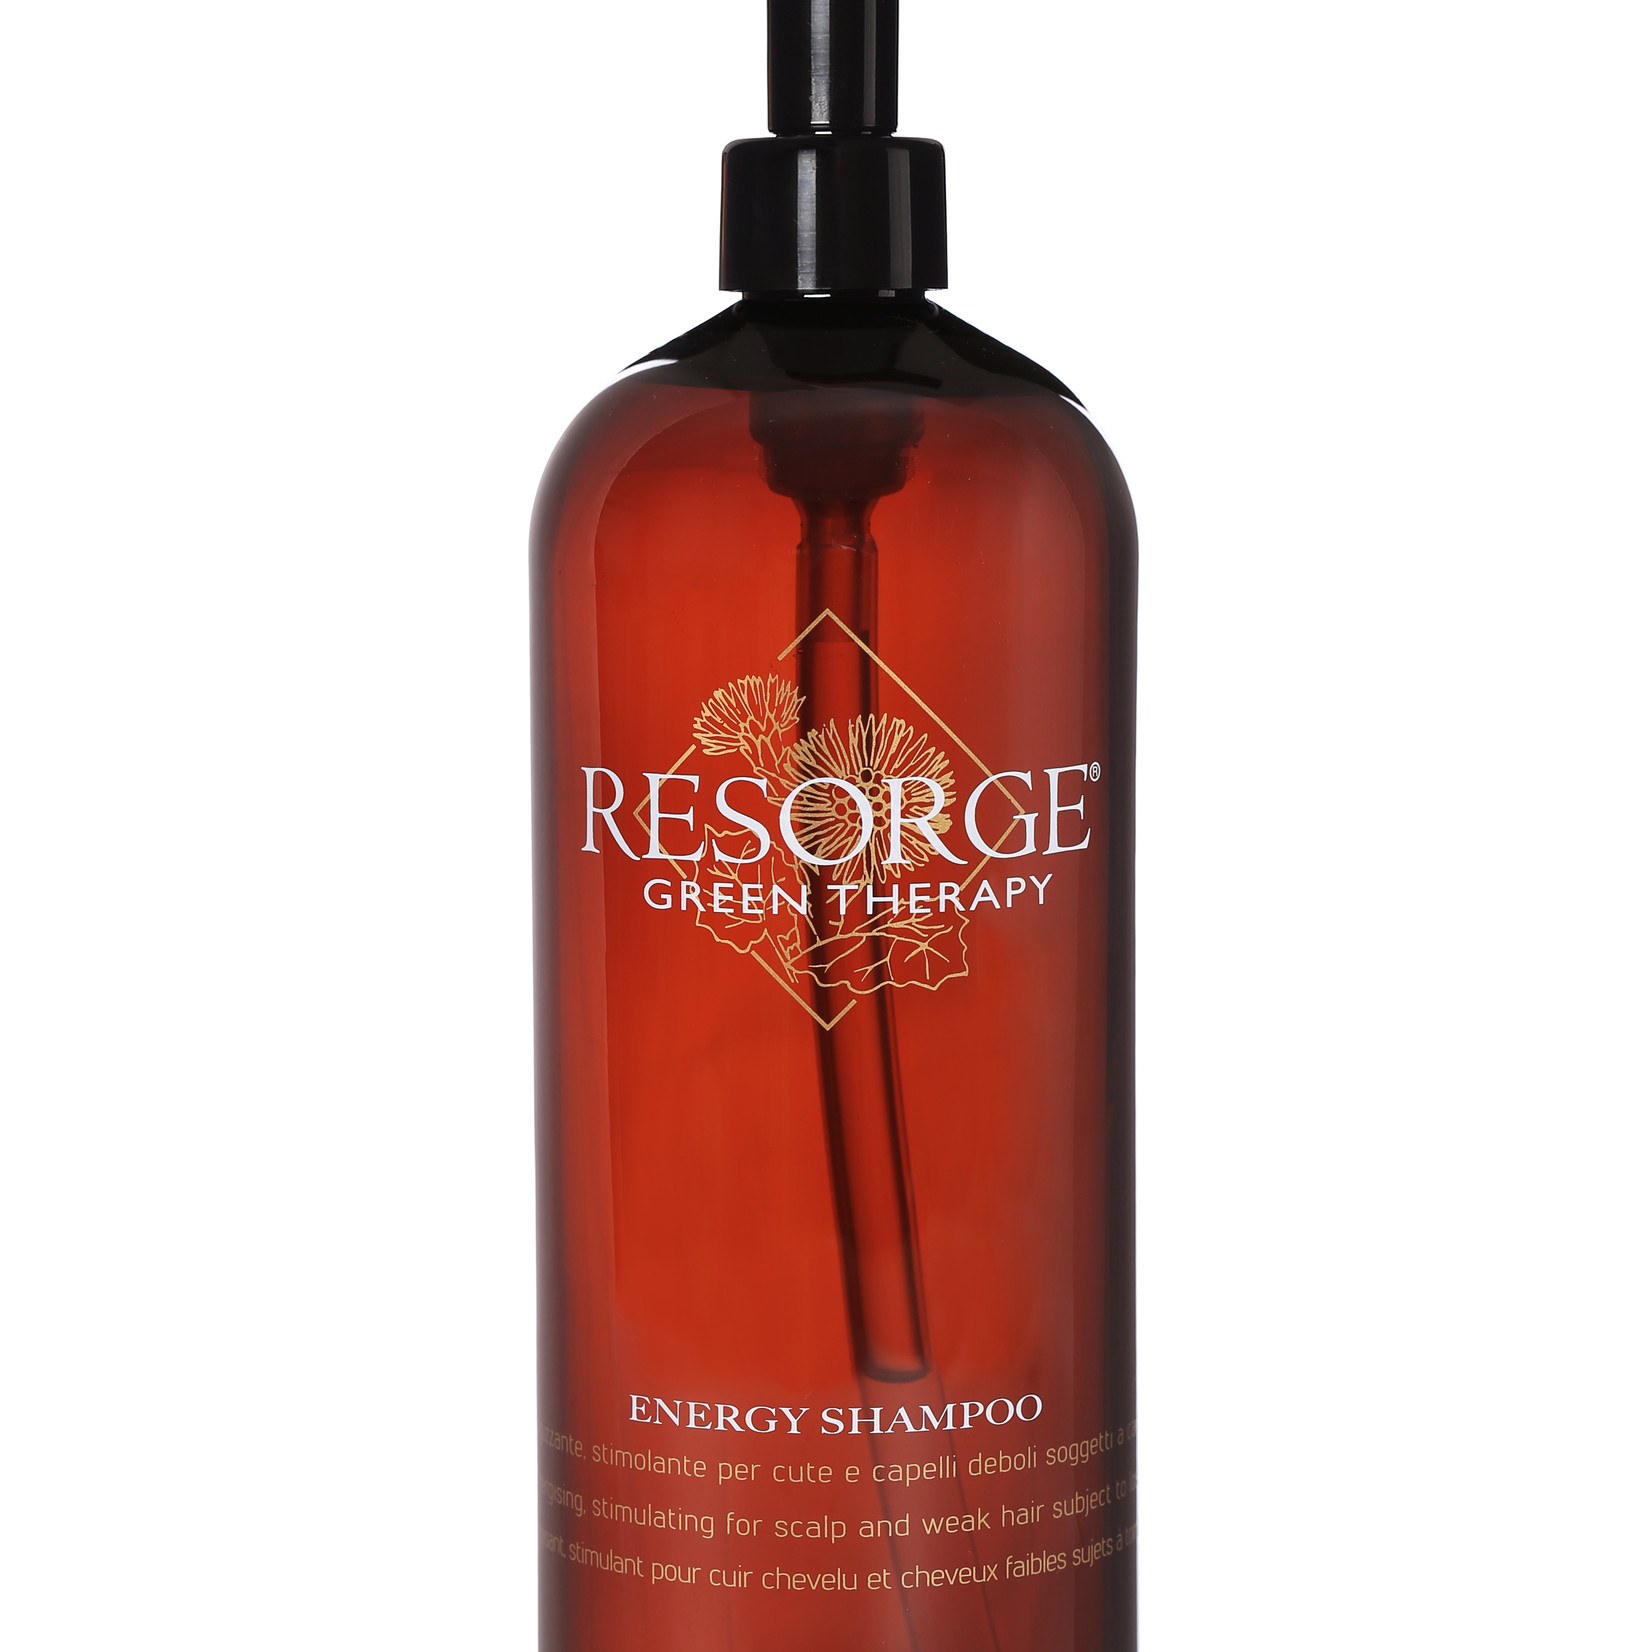 Biacre Resorge Energy Shampoo 1000 ml